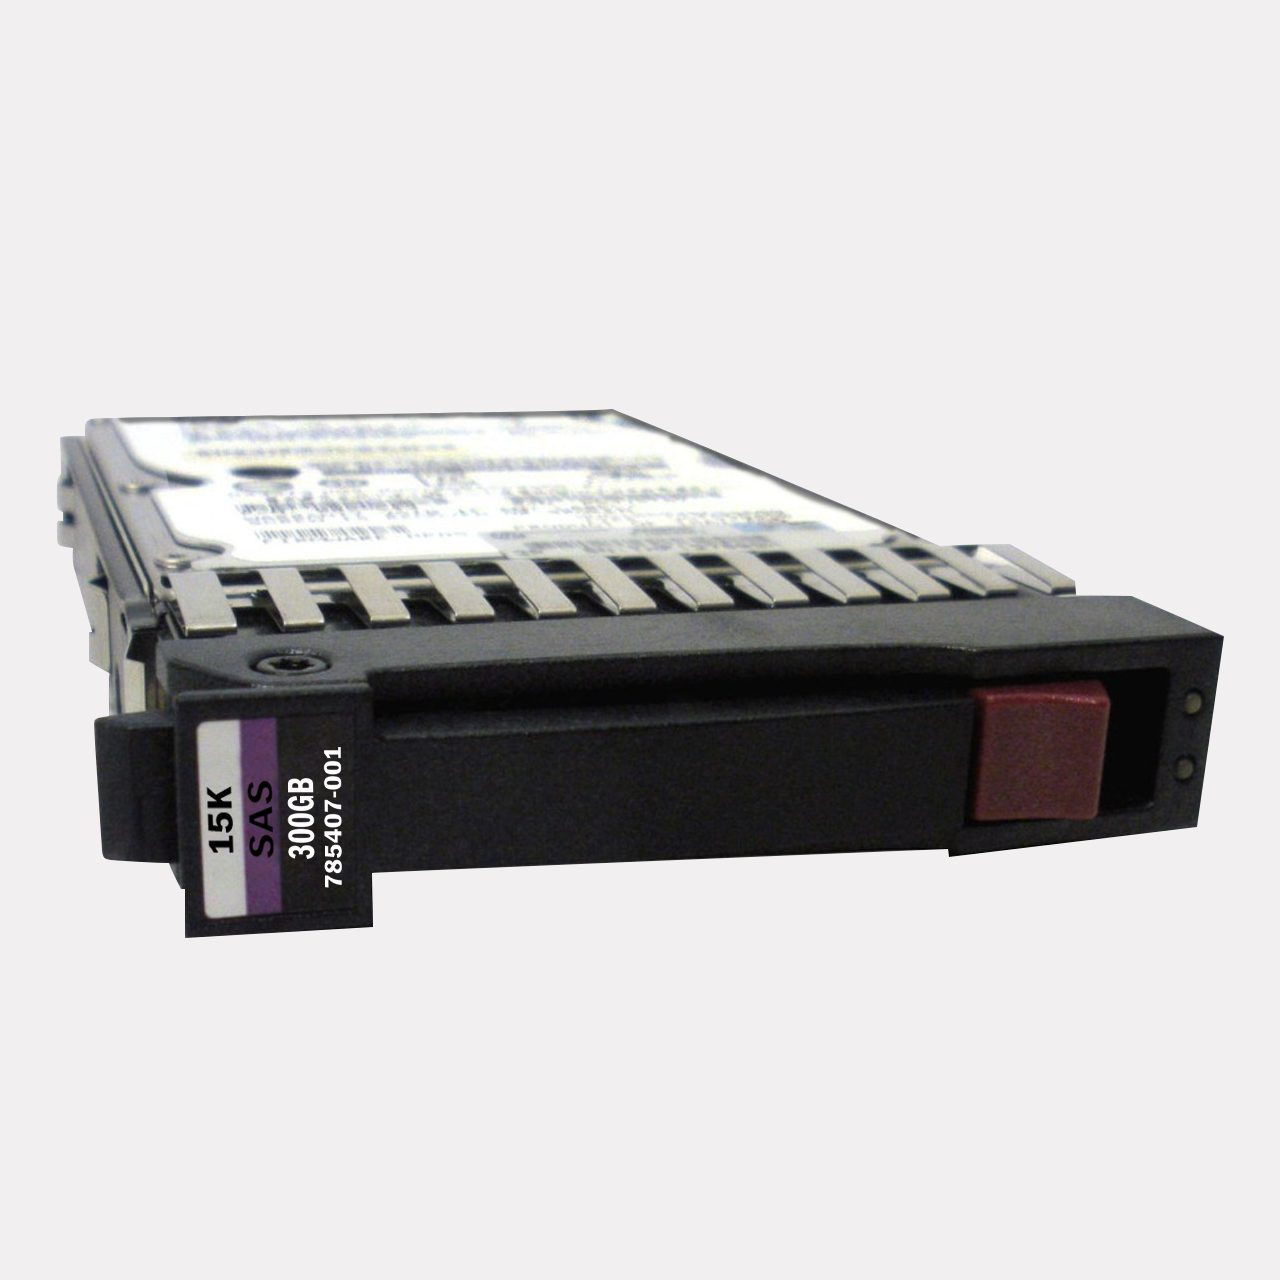 HPE 785407-001 300GB 15kRPM 2.5in SAS-12G Enterprise G4-G7 HDD, Wholesale  785407-001, Price 785407-001